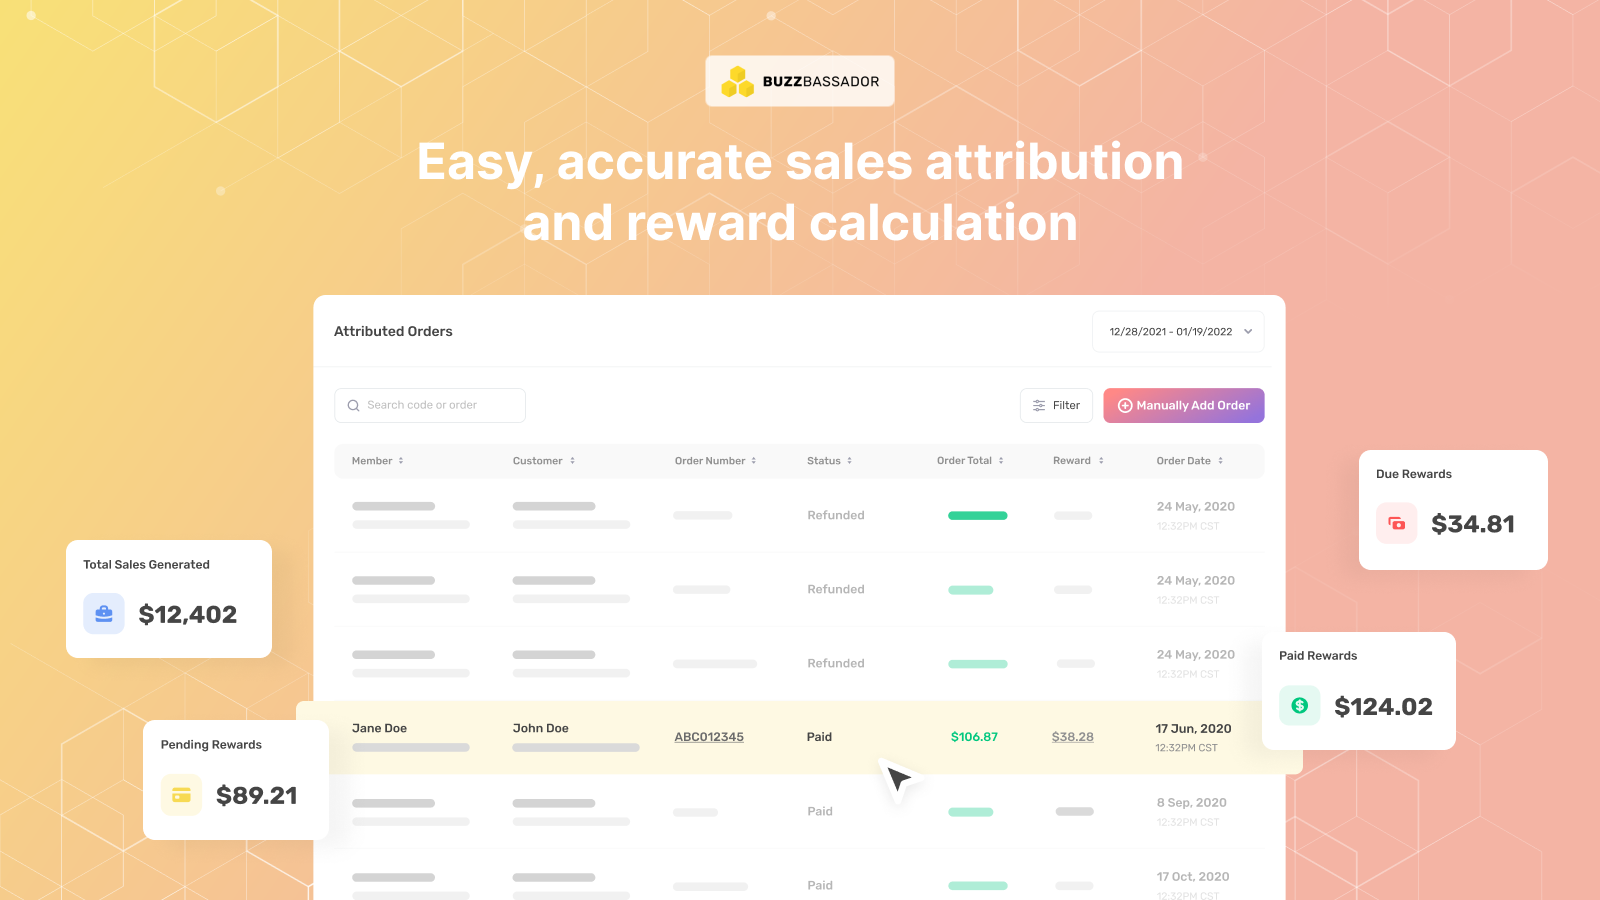 Easy, accurate sales attribution and reward calculation